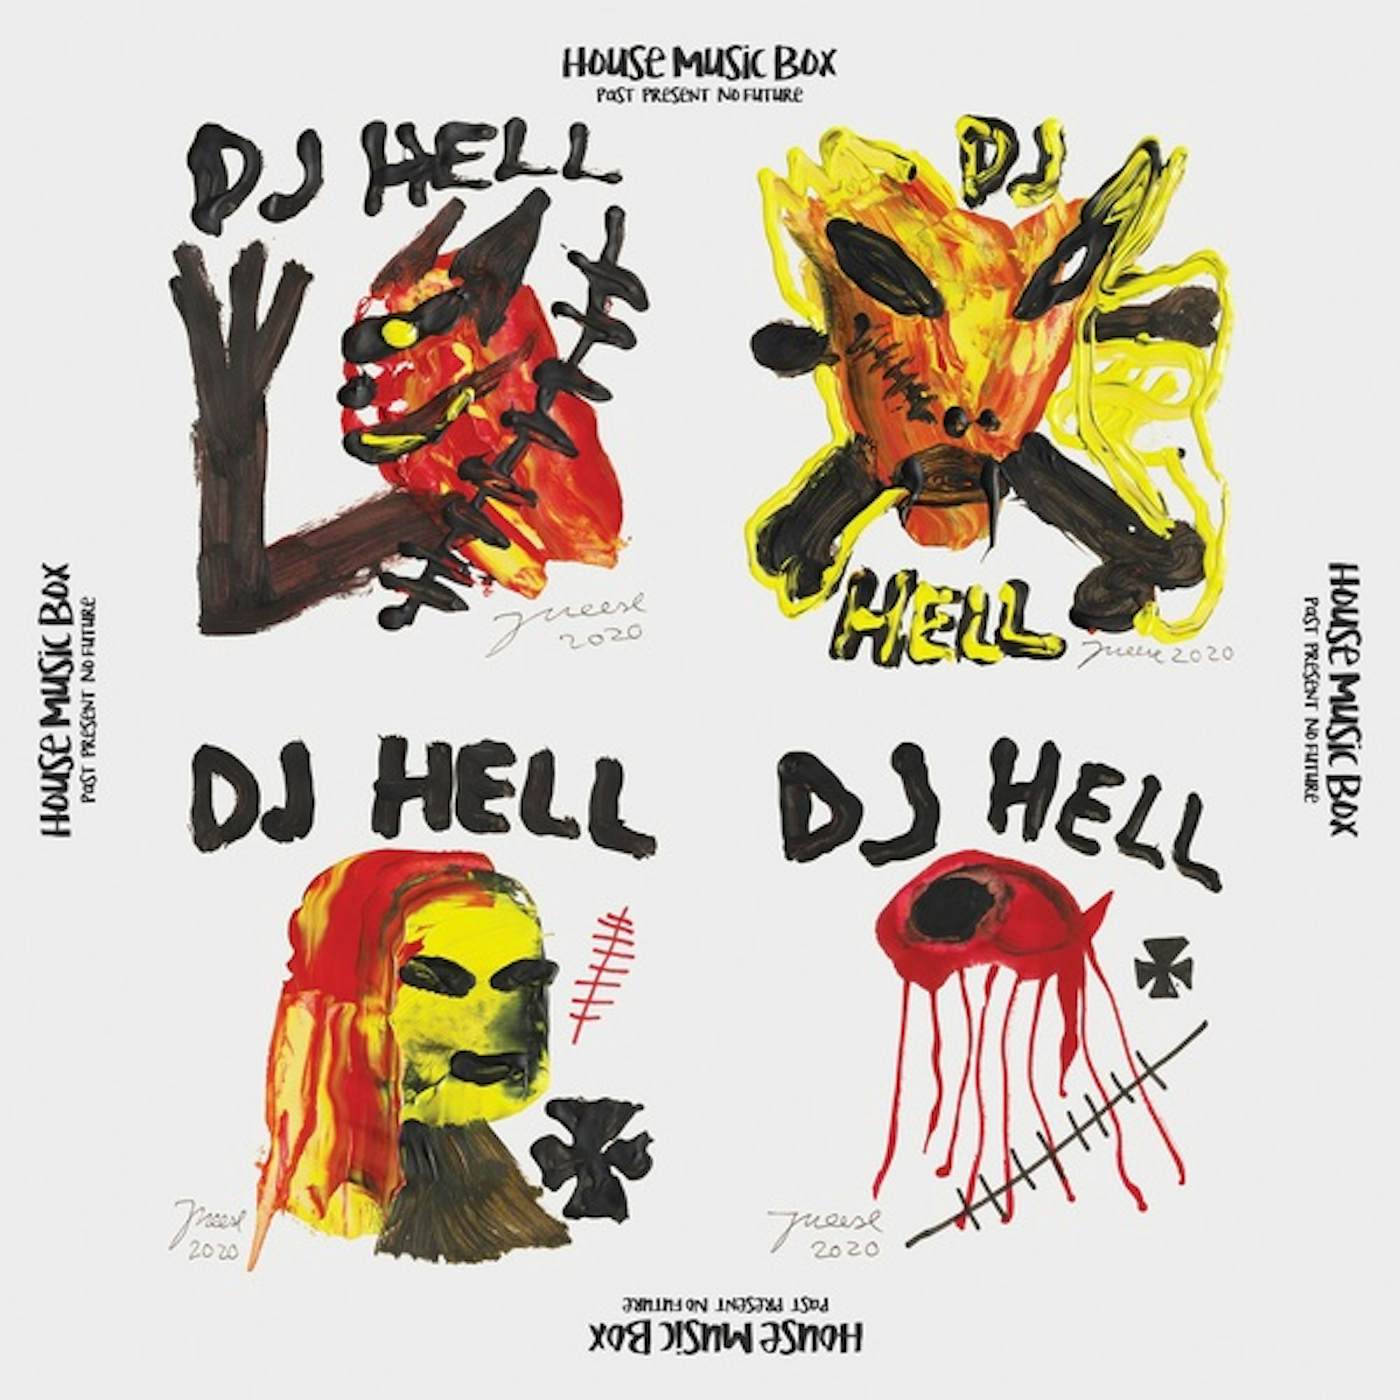 DJ Hell HOUSE MUSIC BOX (PAST, PRESENT, NO FUTURE) (Vinyl)